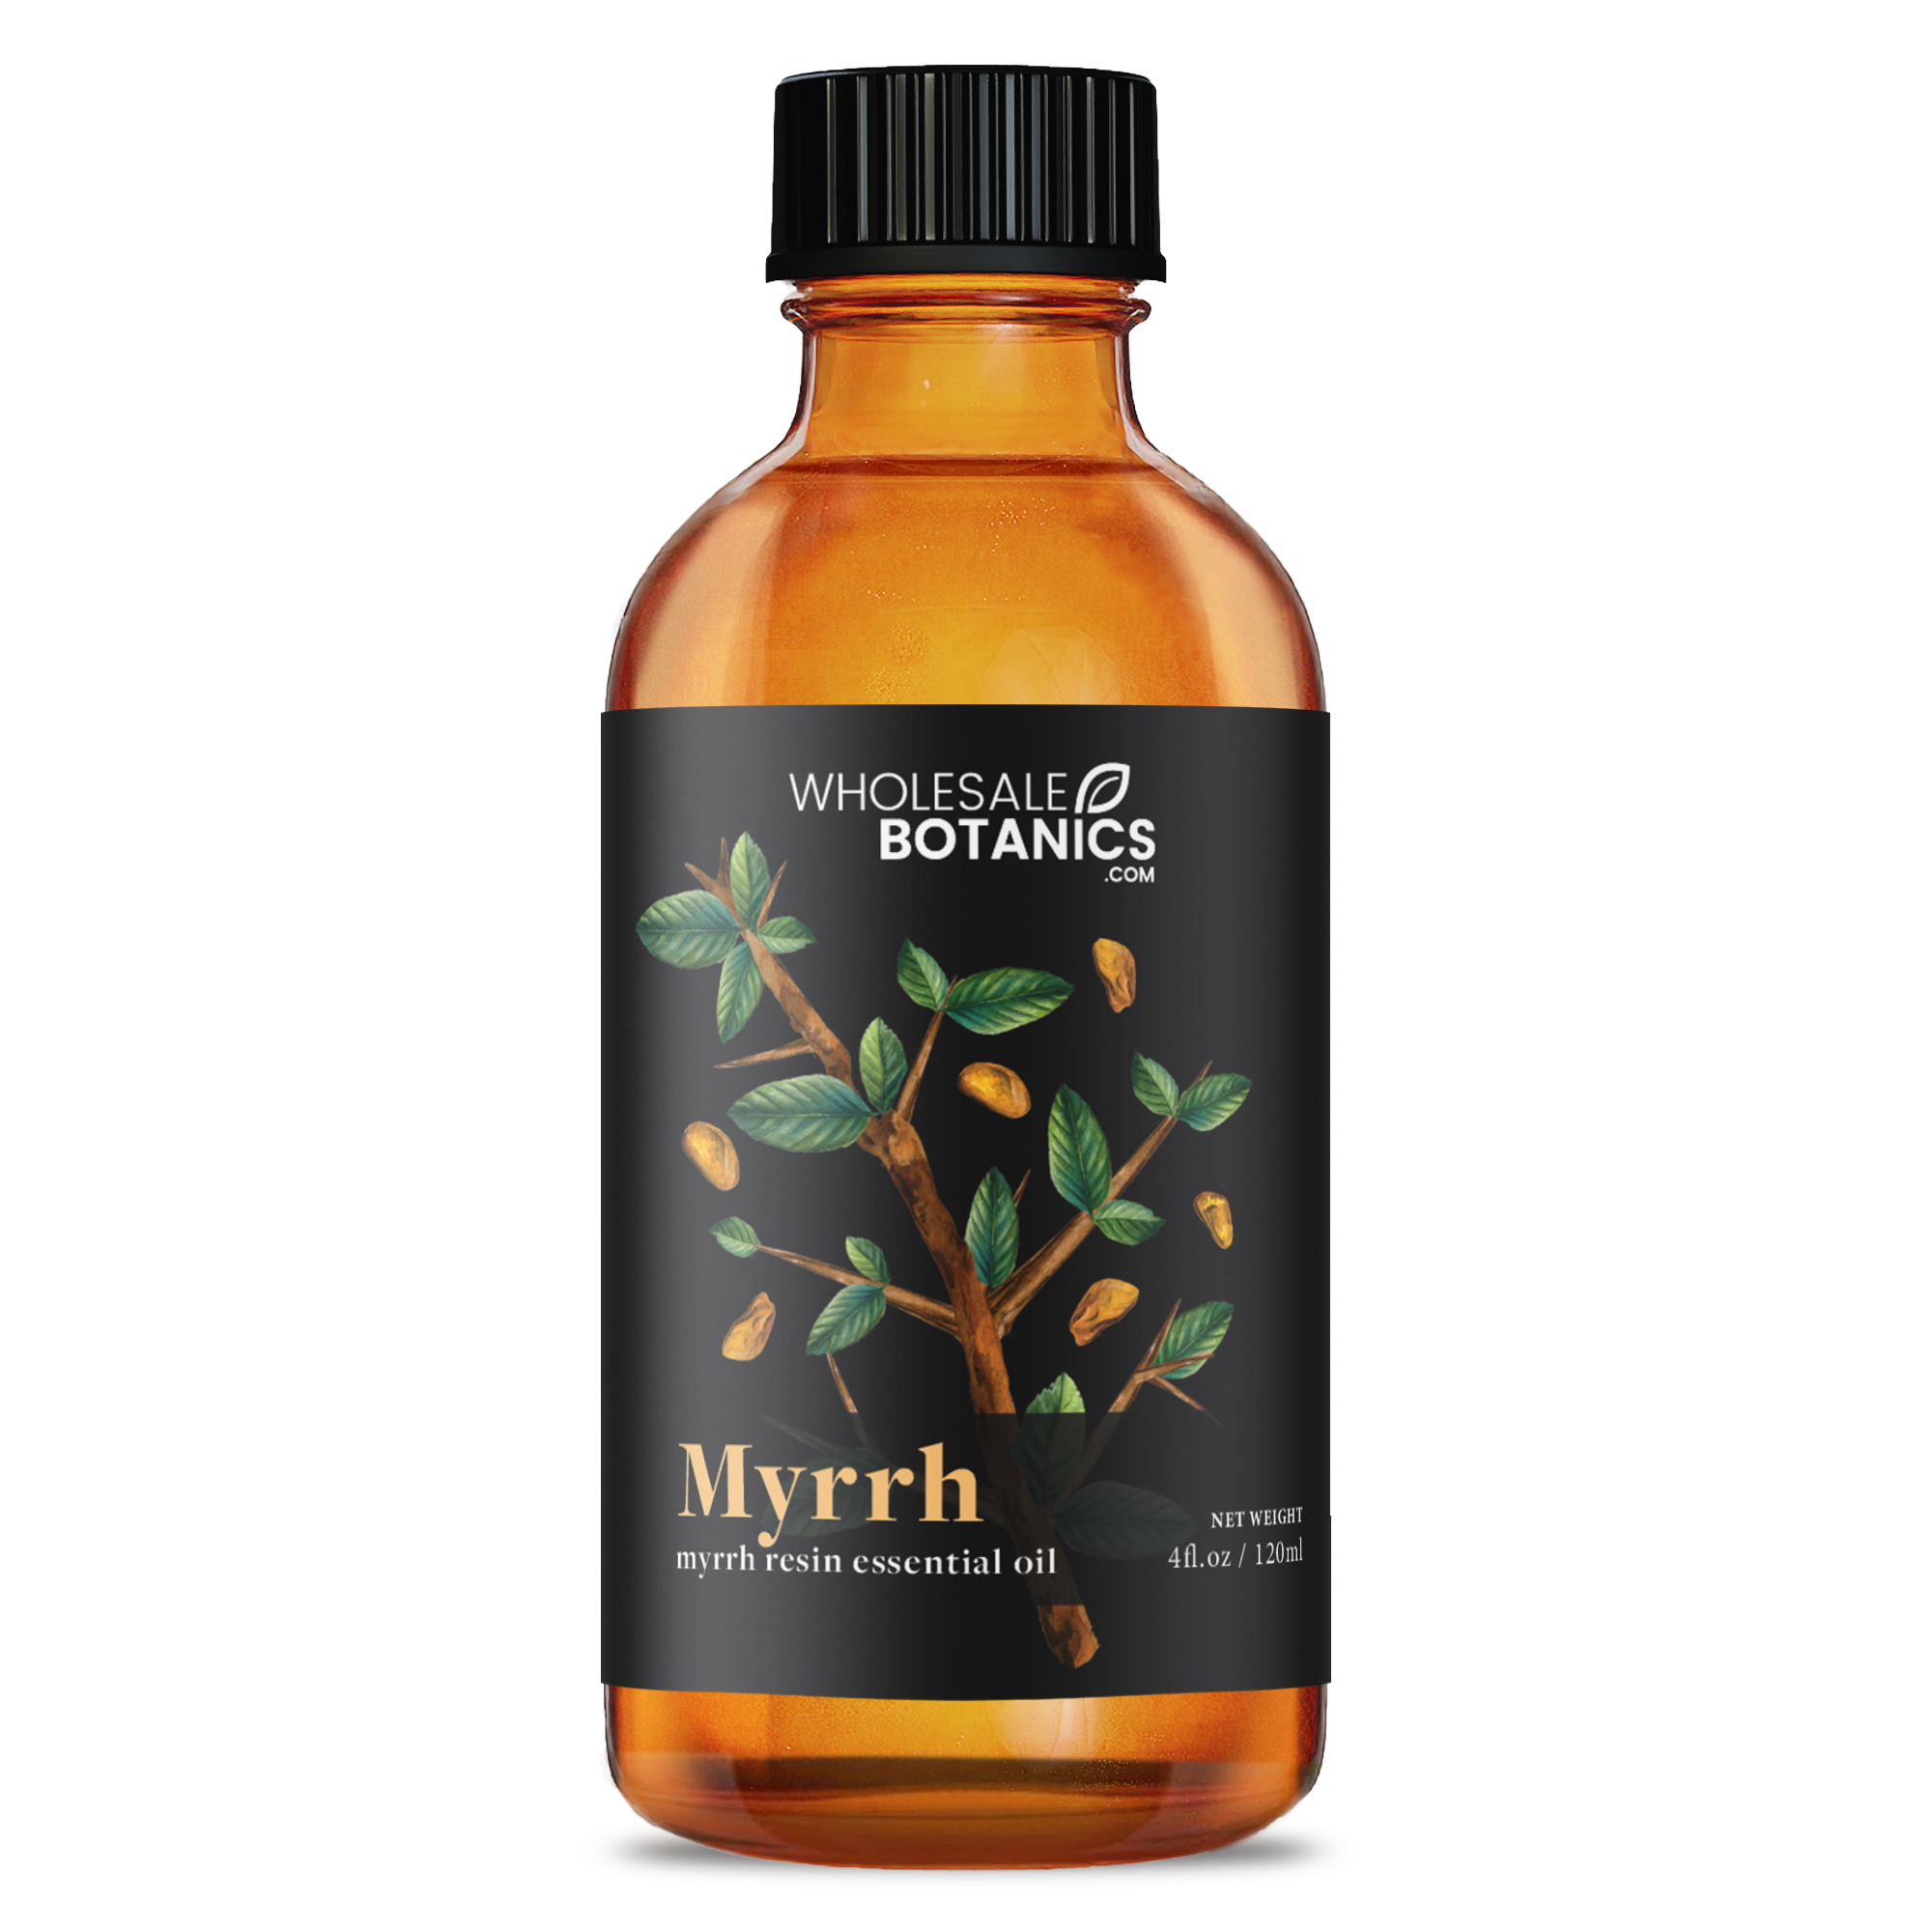 Myrrh Oil  NOW® Essential Oils